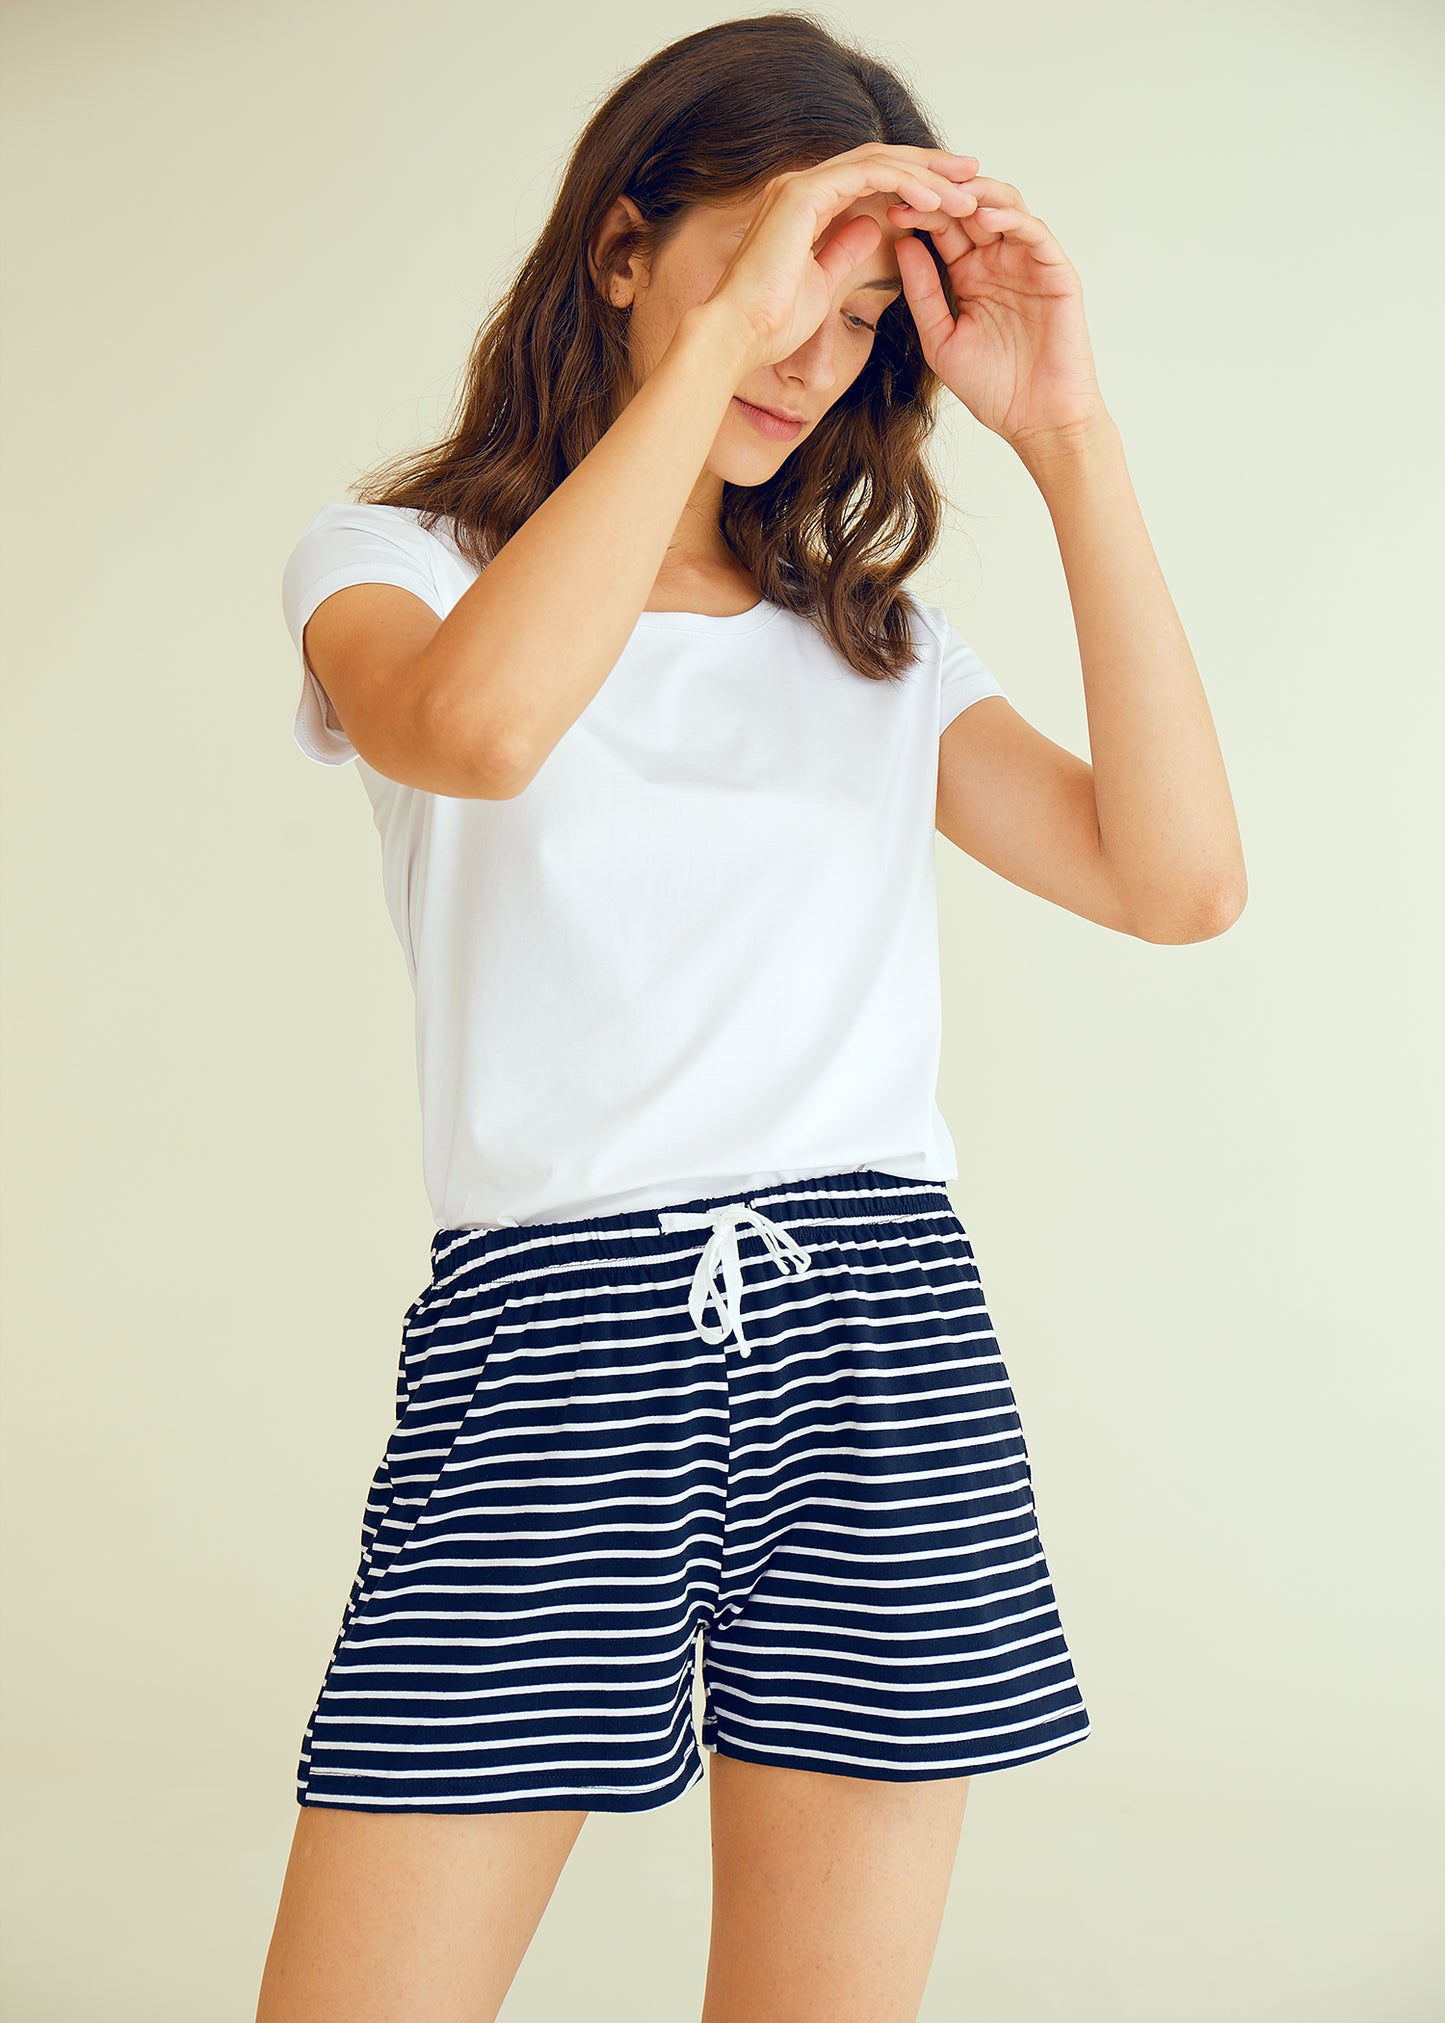 Women's Cotton Striped Pajama Shorts